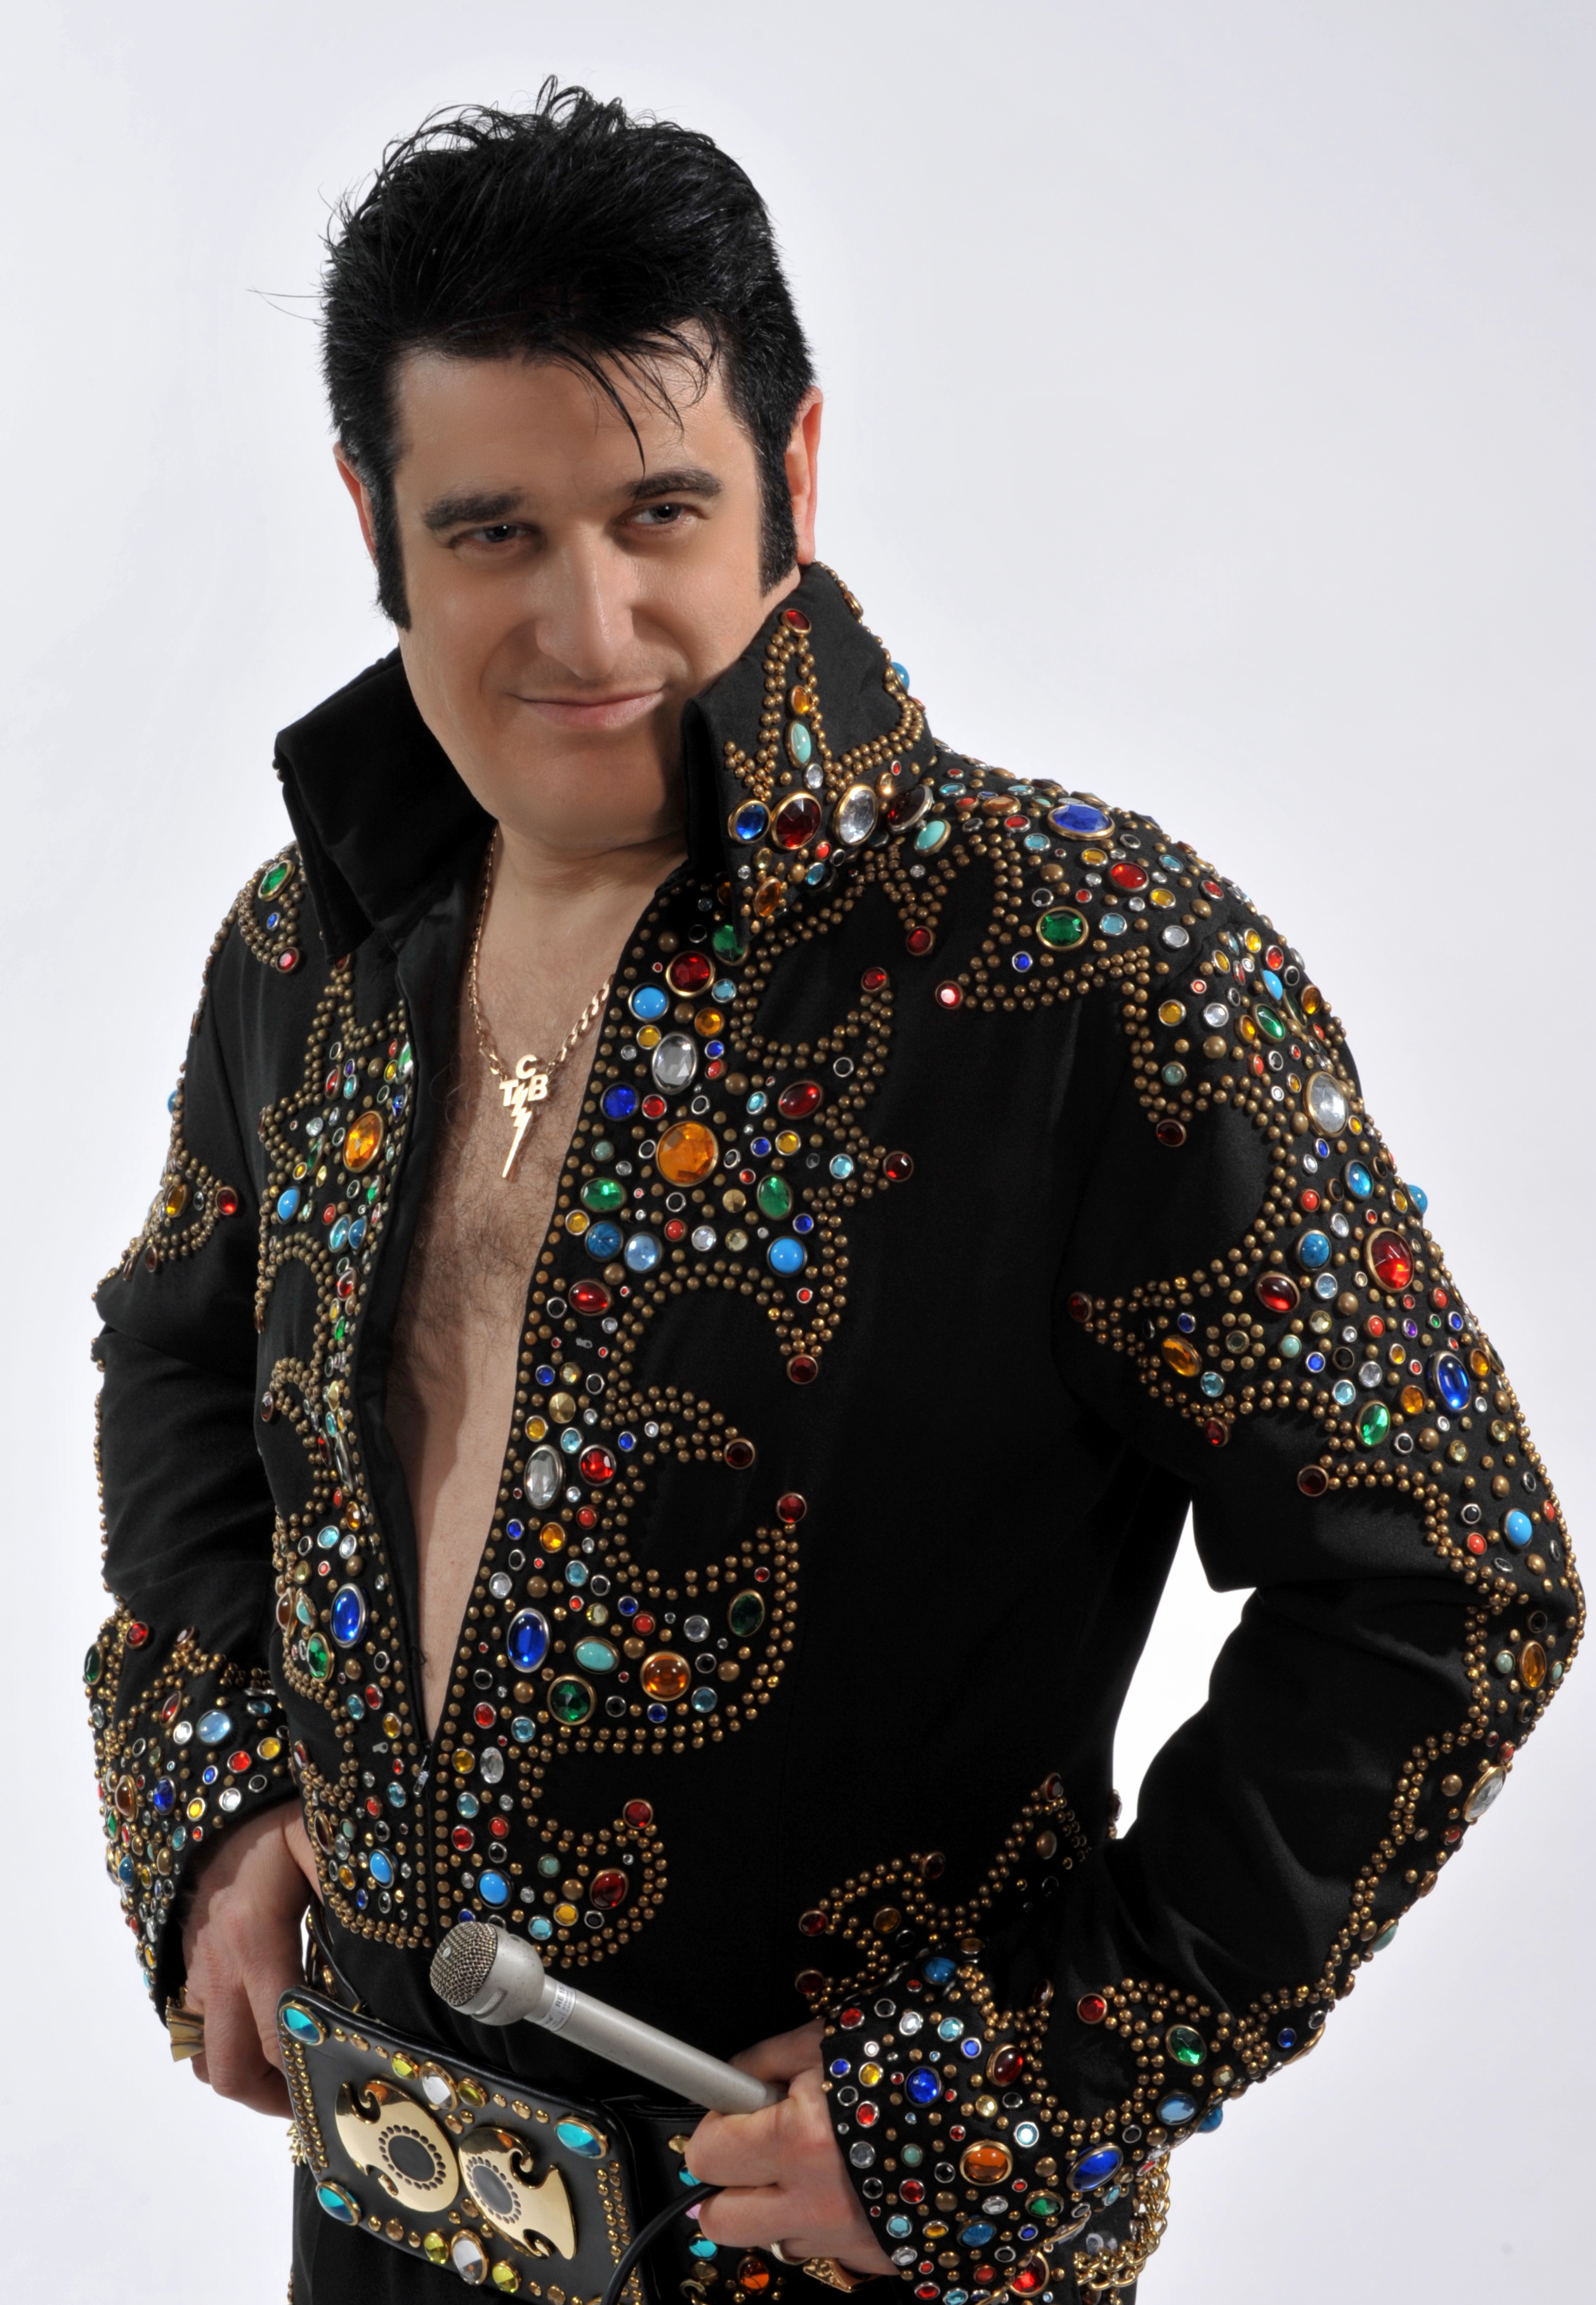 Elvis impersonator Martyn Lopes-Dias